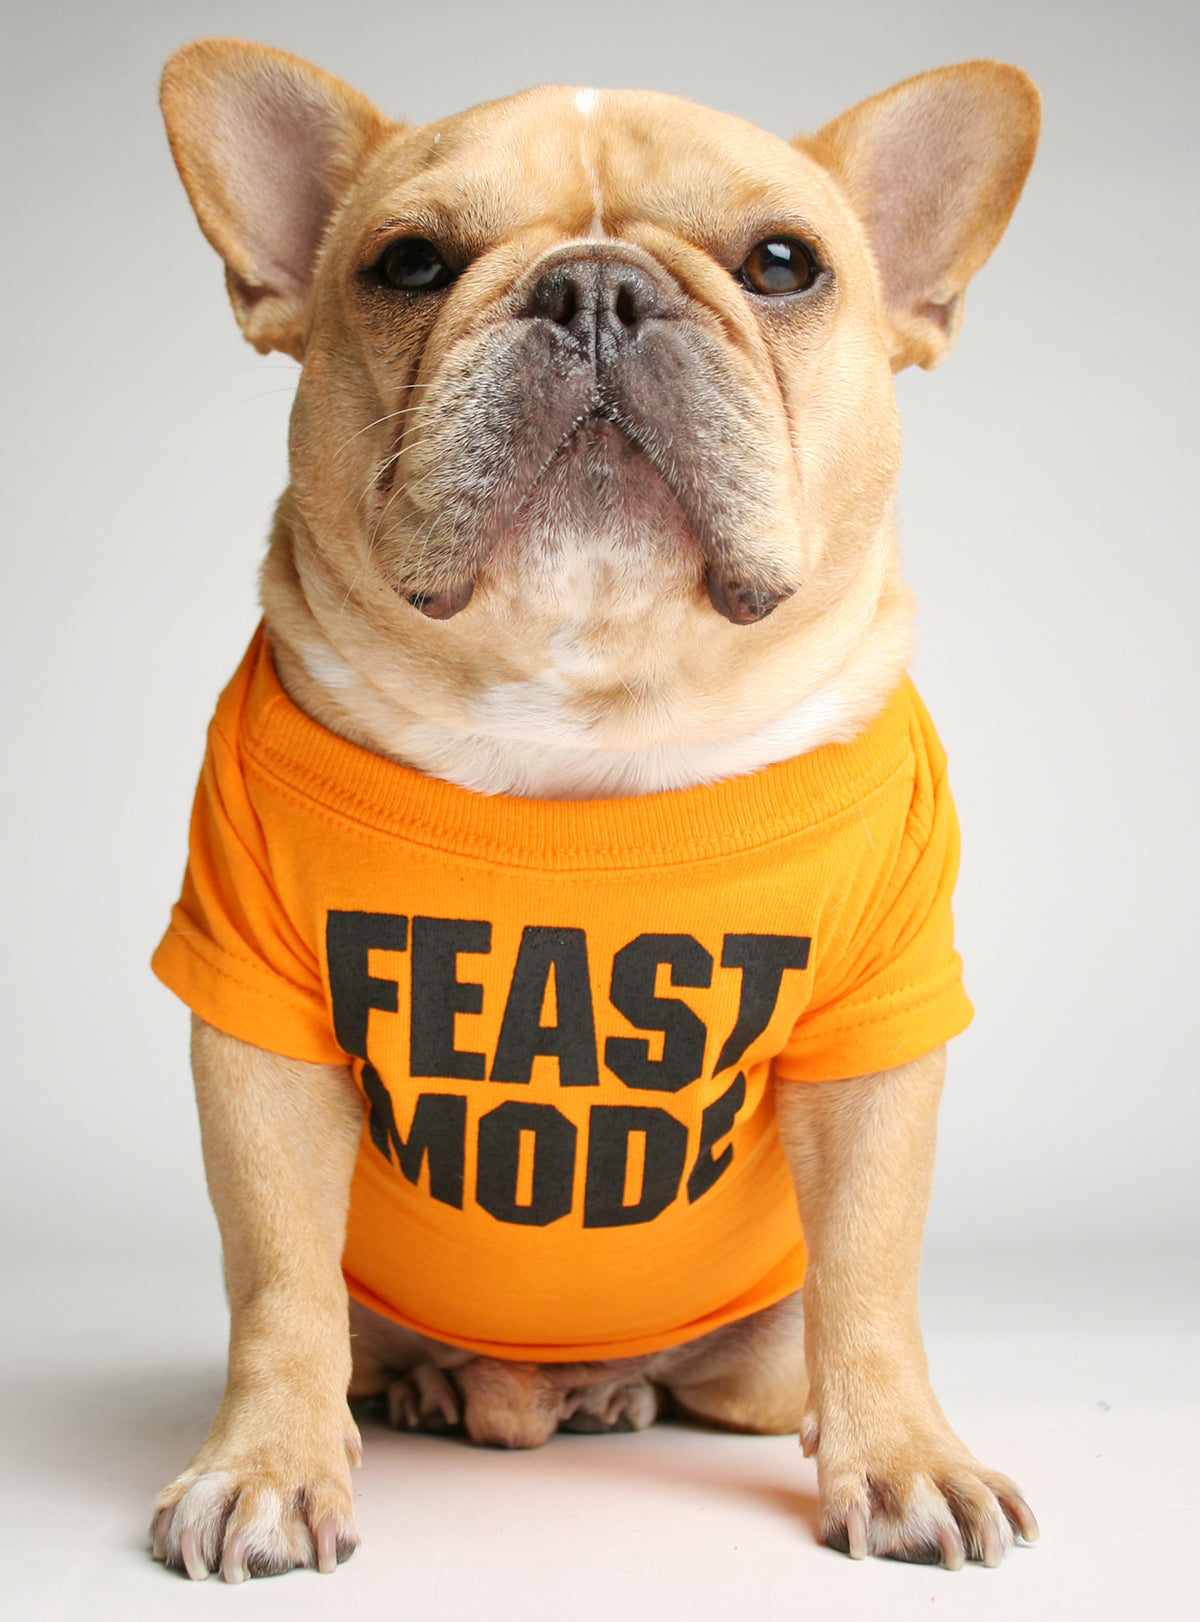 Feast Mode Dog Tee